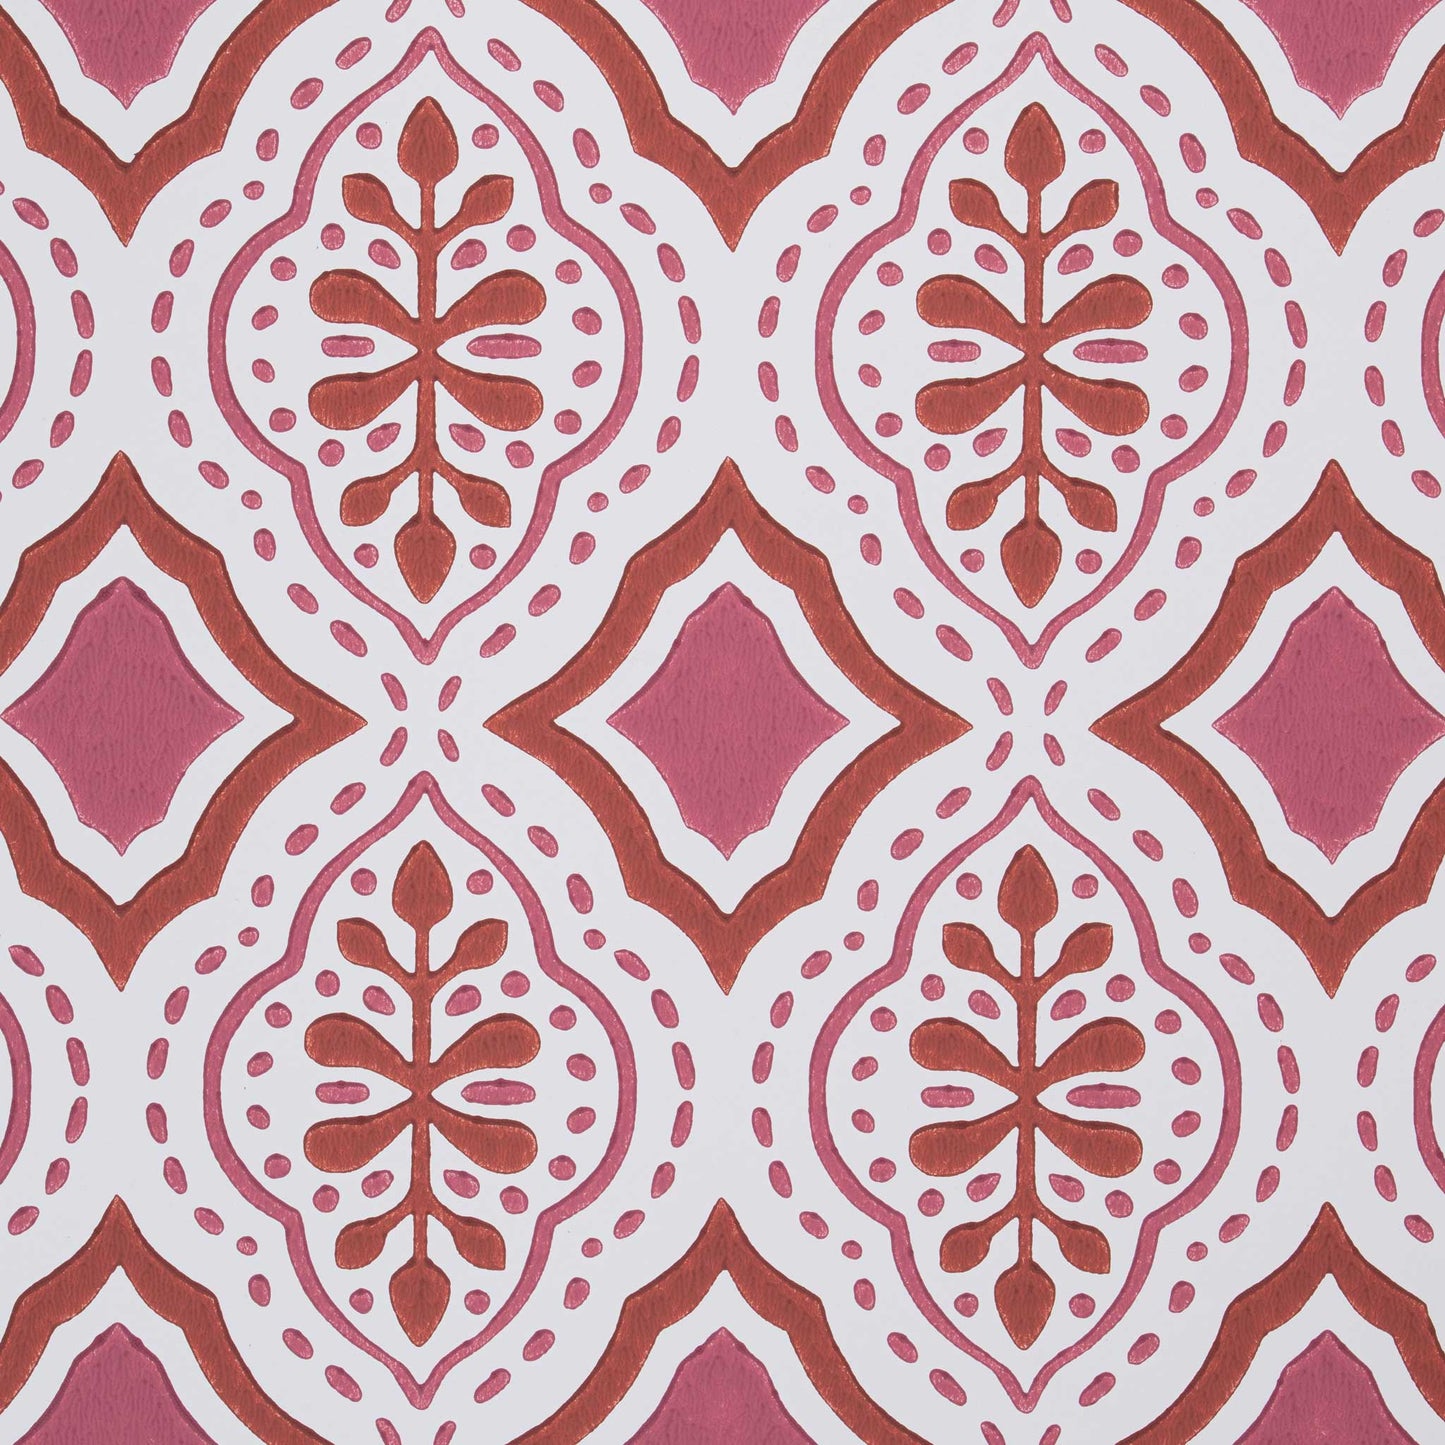 Rhombus Wallpaper in Rhubarb and Pink